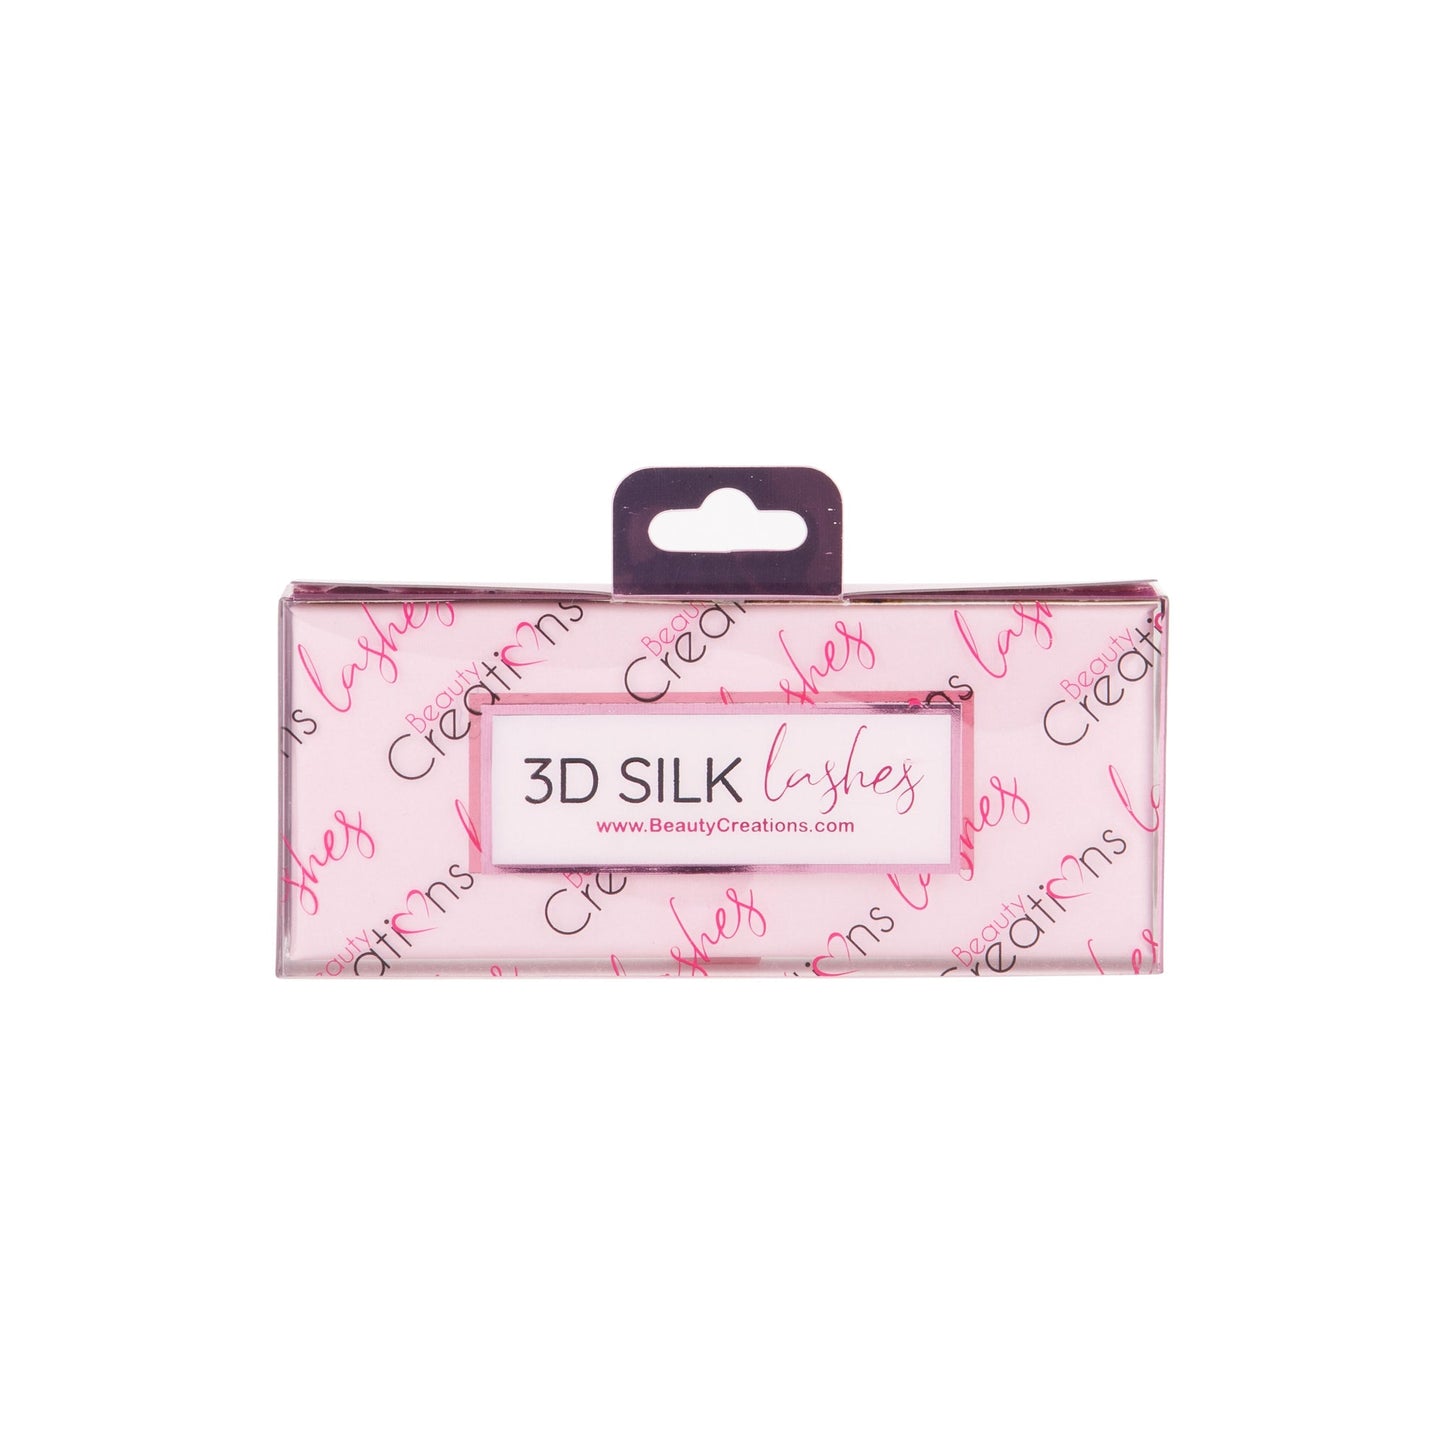 Lewk - 3D Silk Lashes